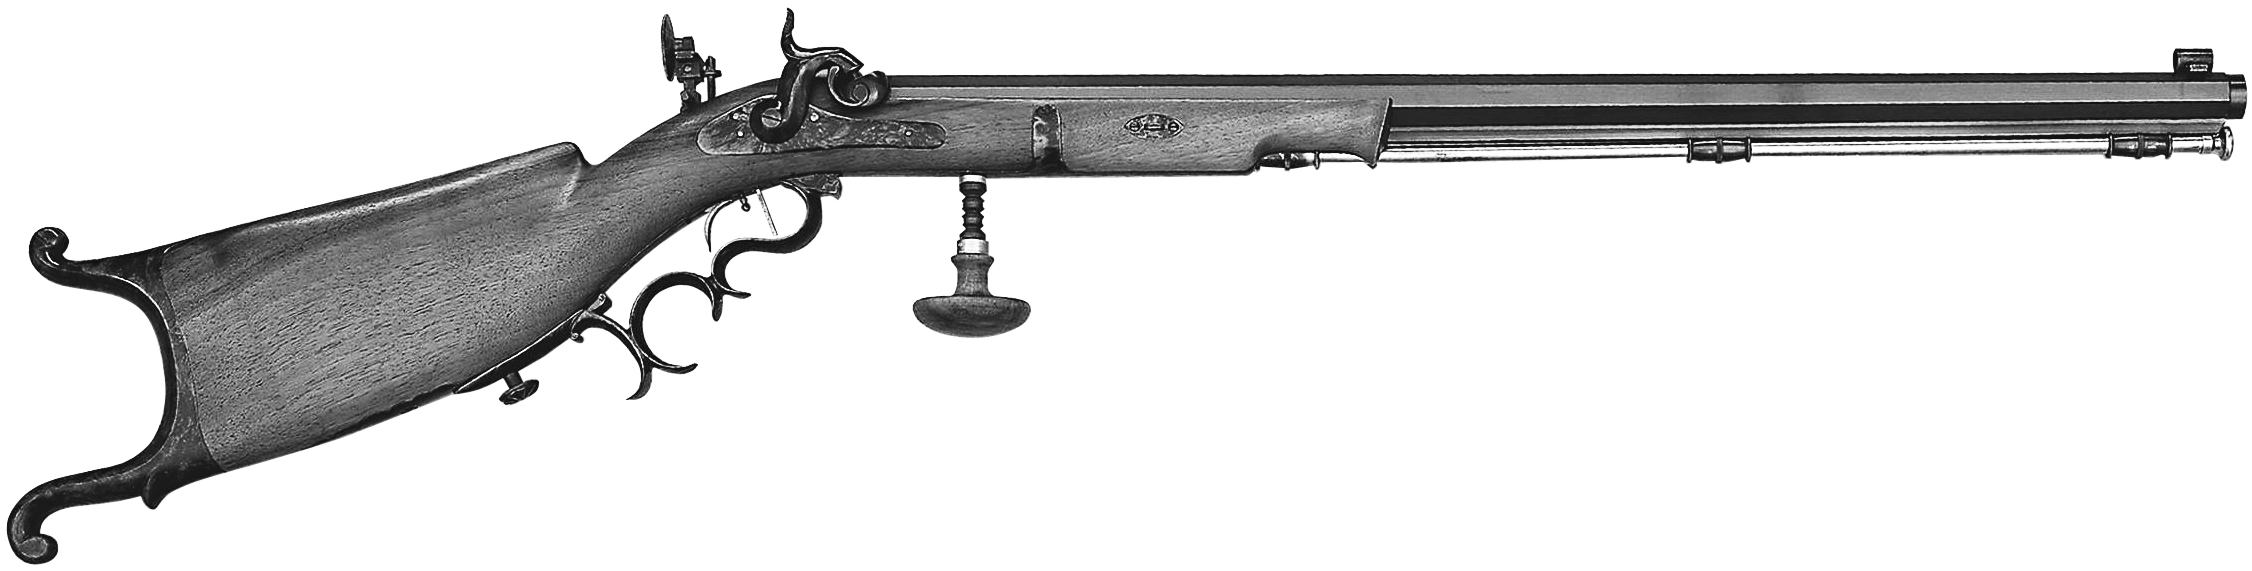 Bristlen a Morges Standard Rifle